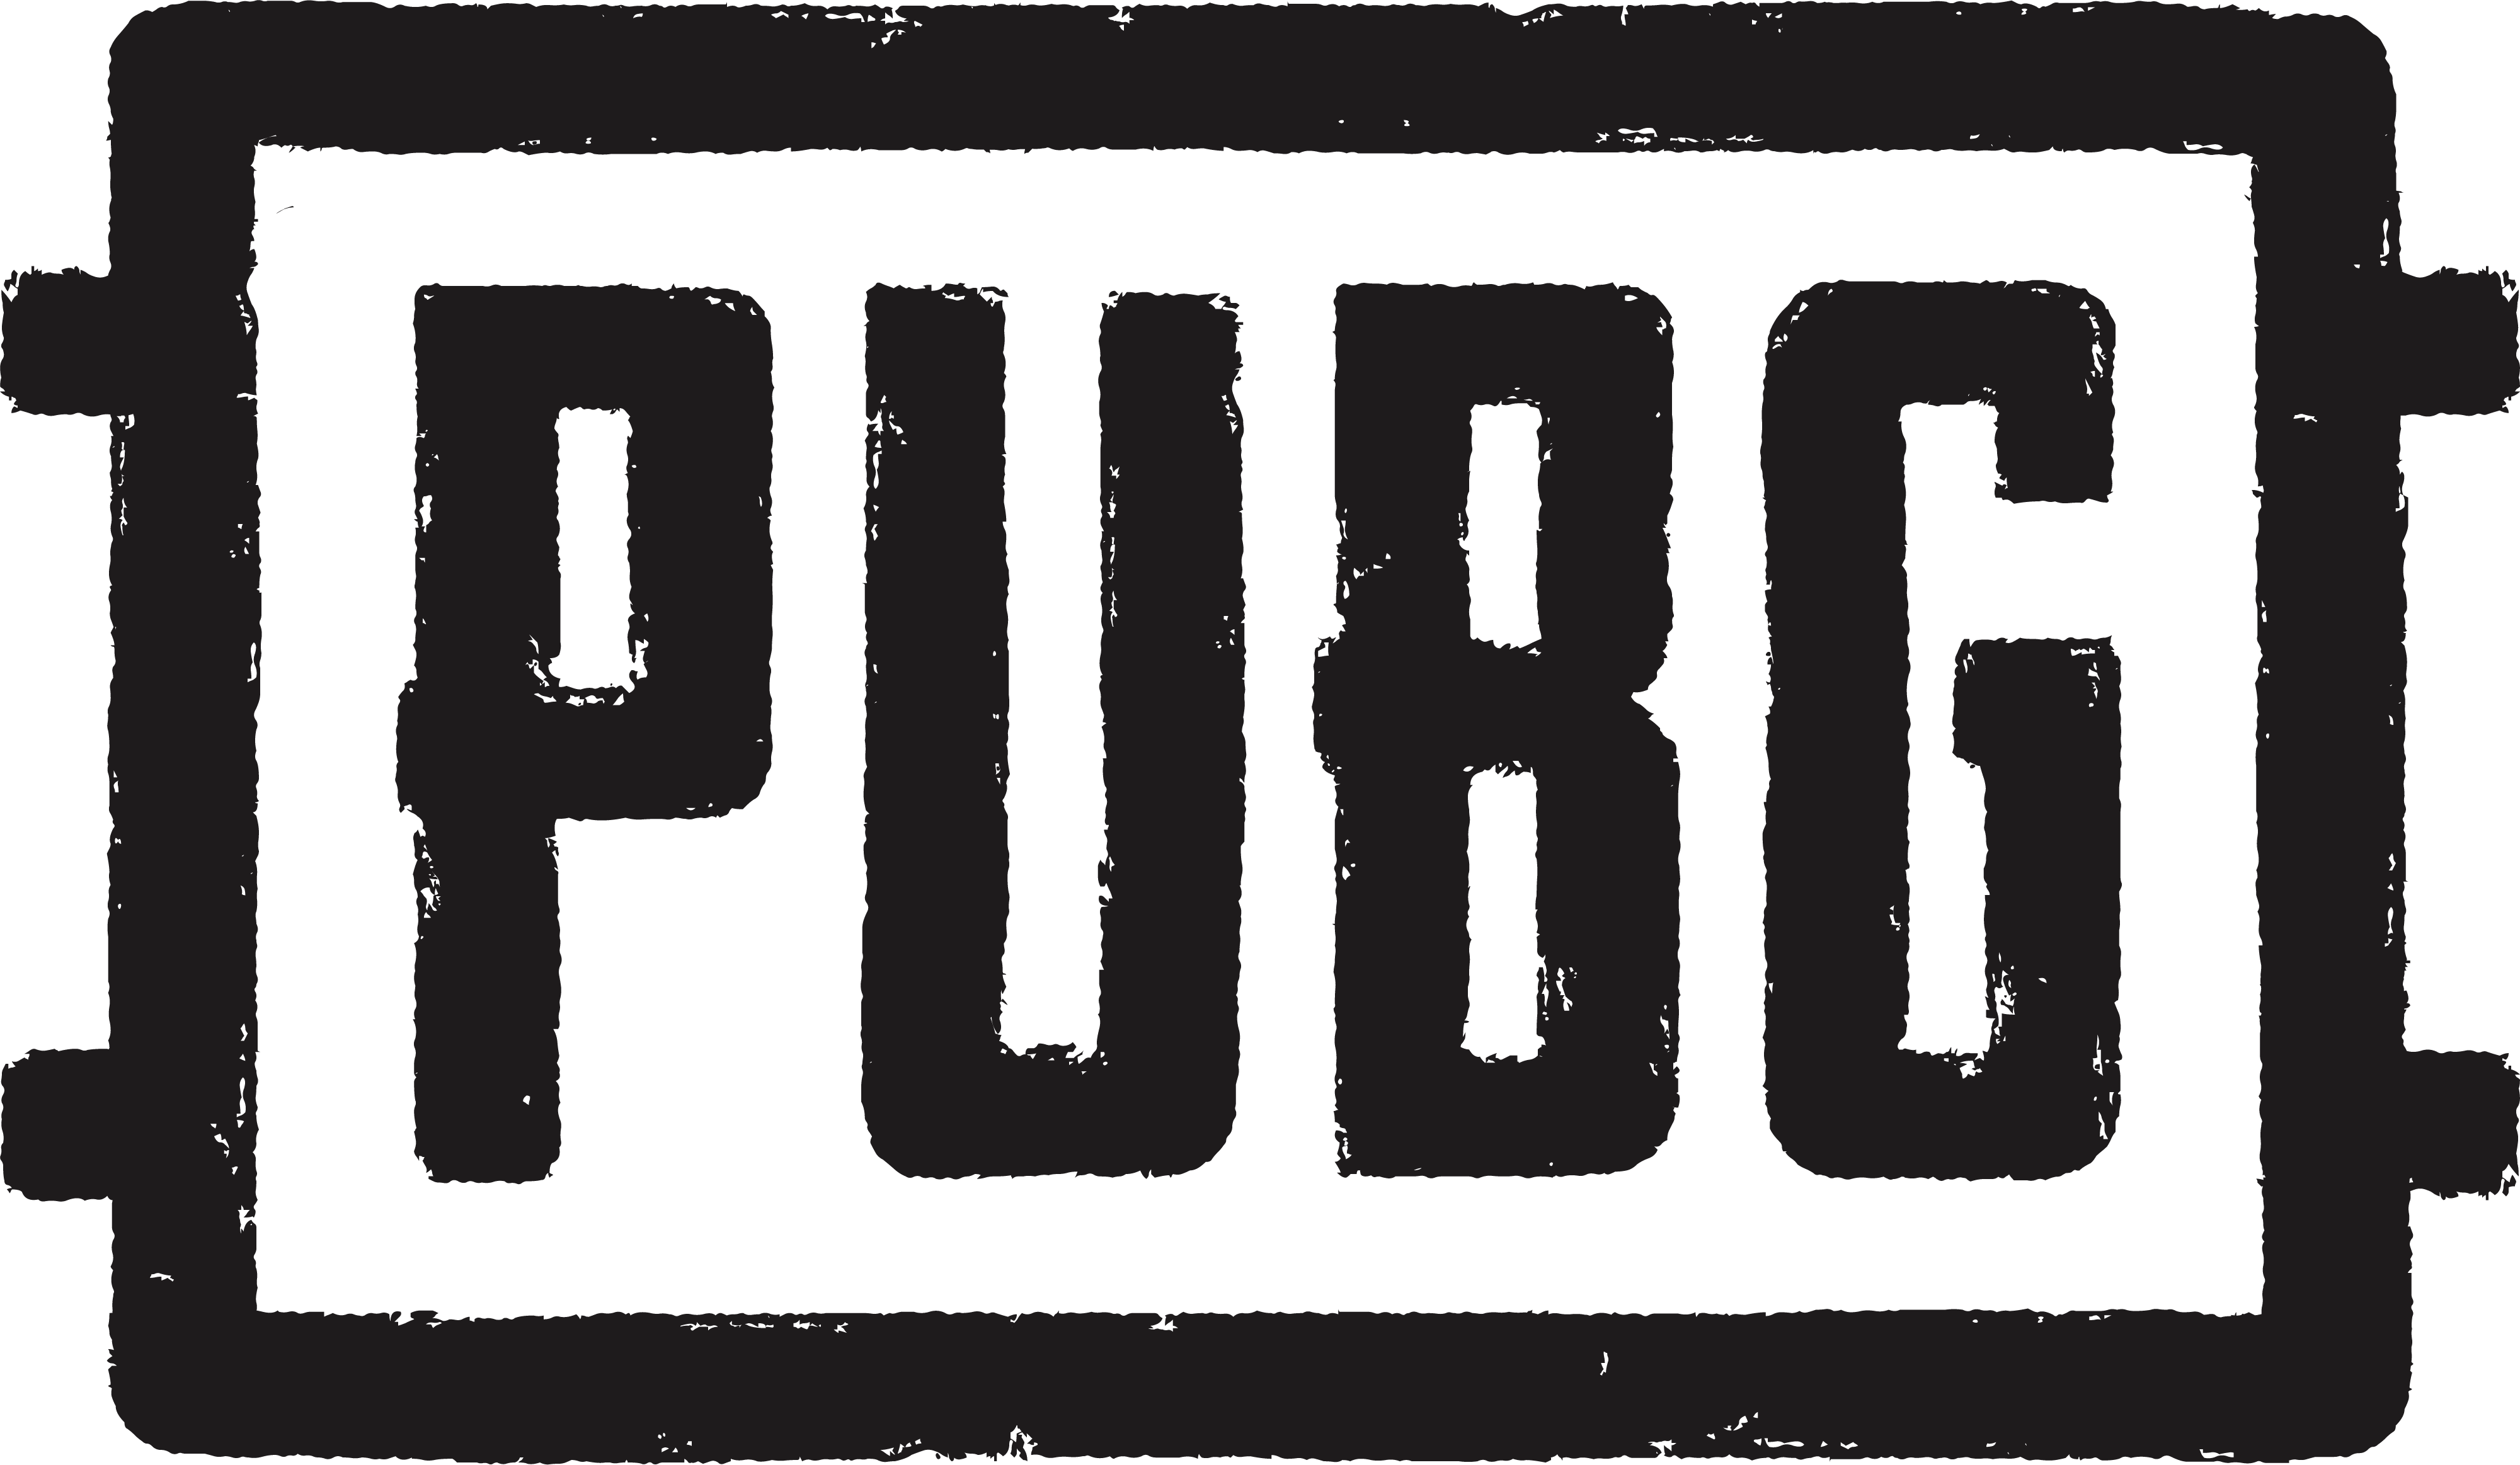 Pubg PNG Image, Pubg Character, Pubg Games Logo Transparent PNG Logos